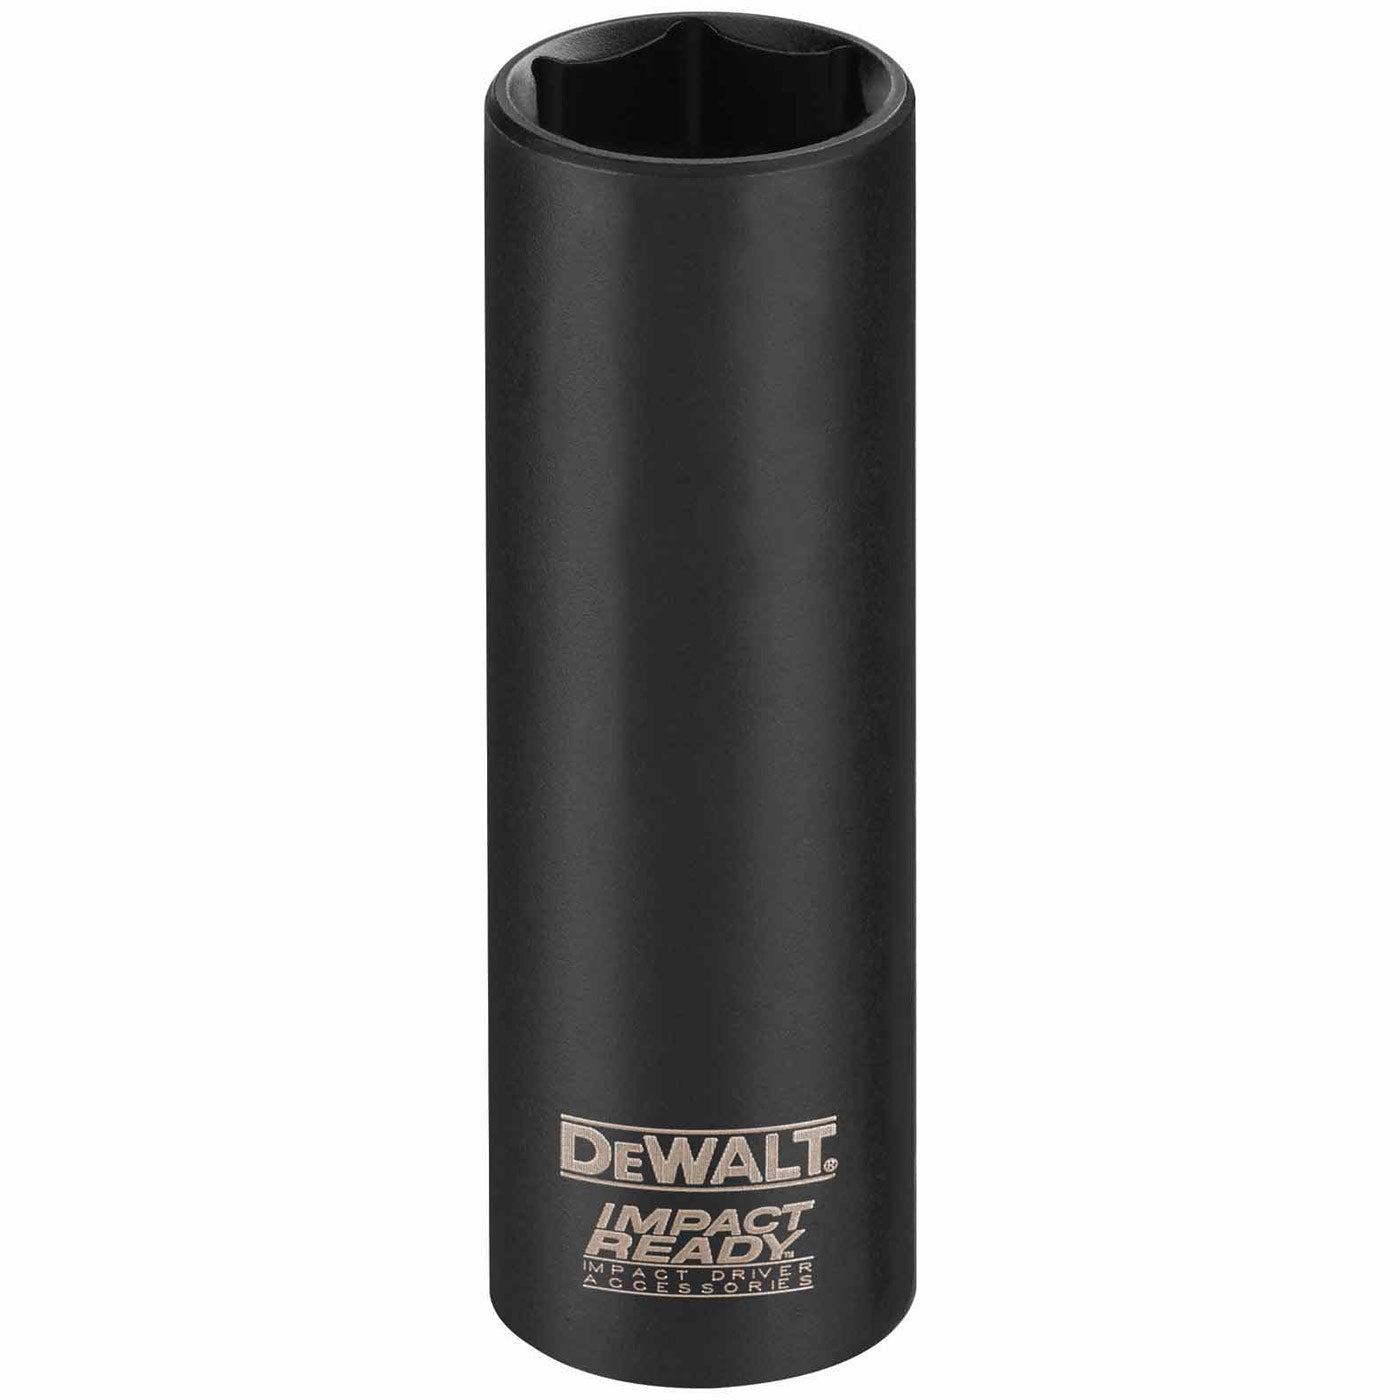 DeWalt DW22862 1/2" Deep Pocket Impact Ready Socket 1/2"